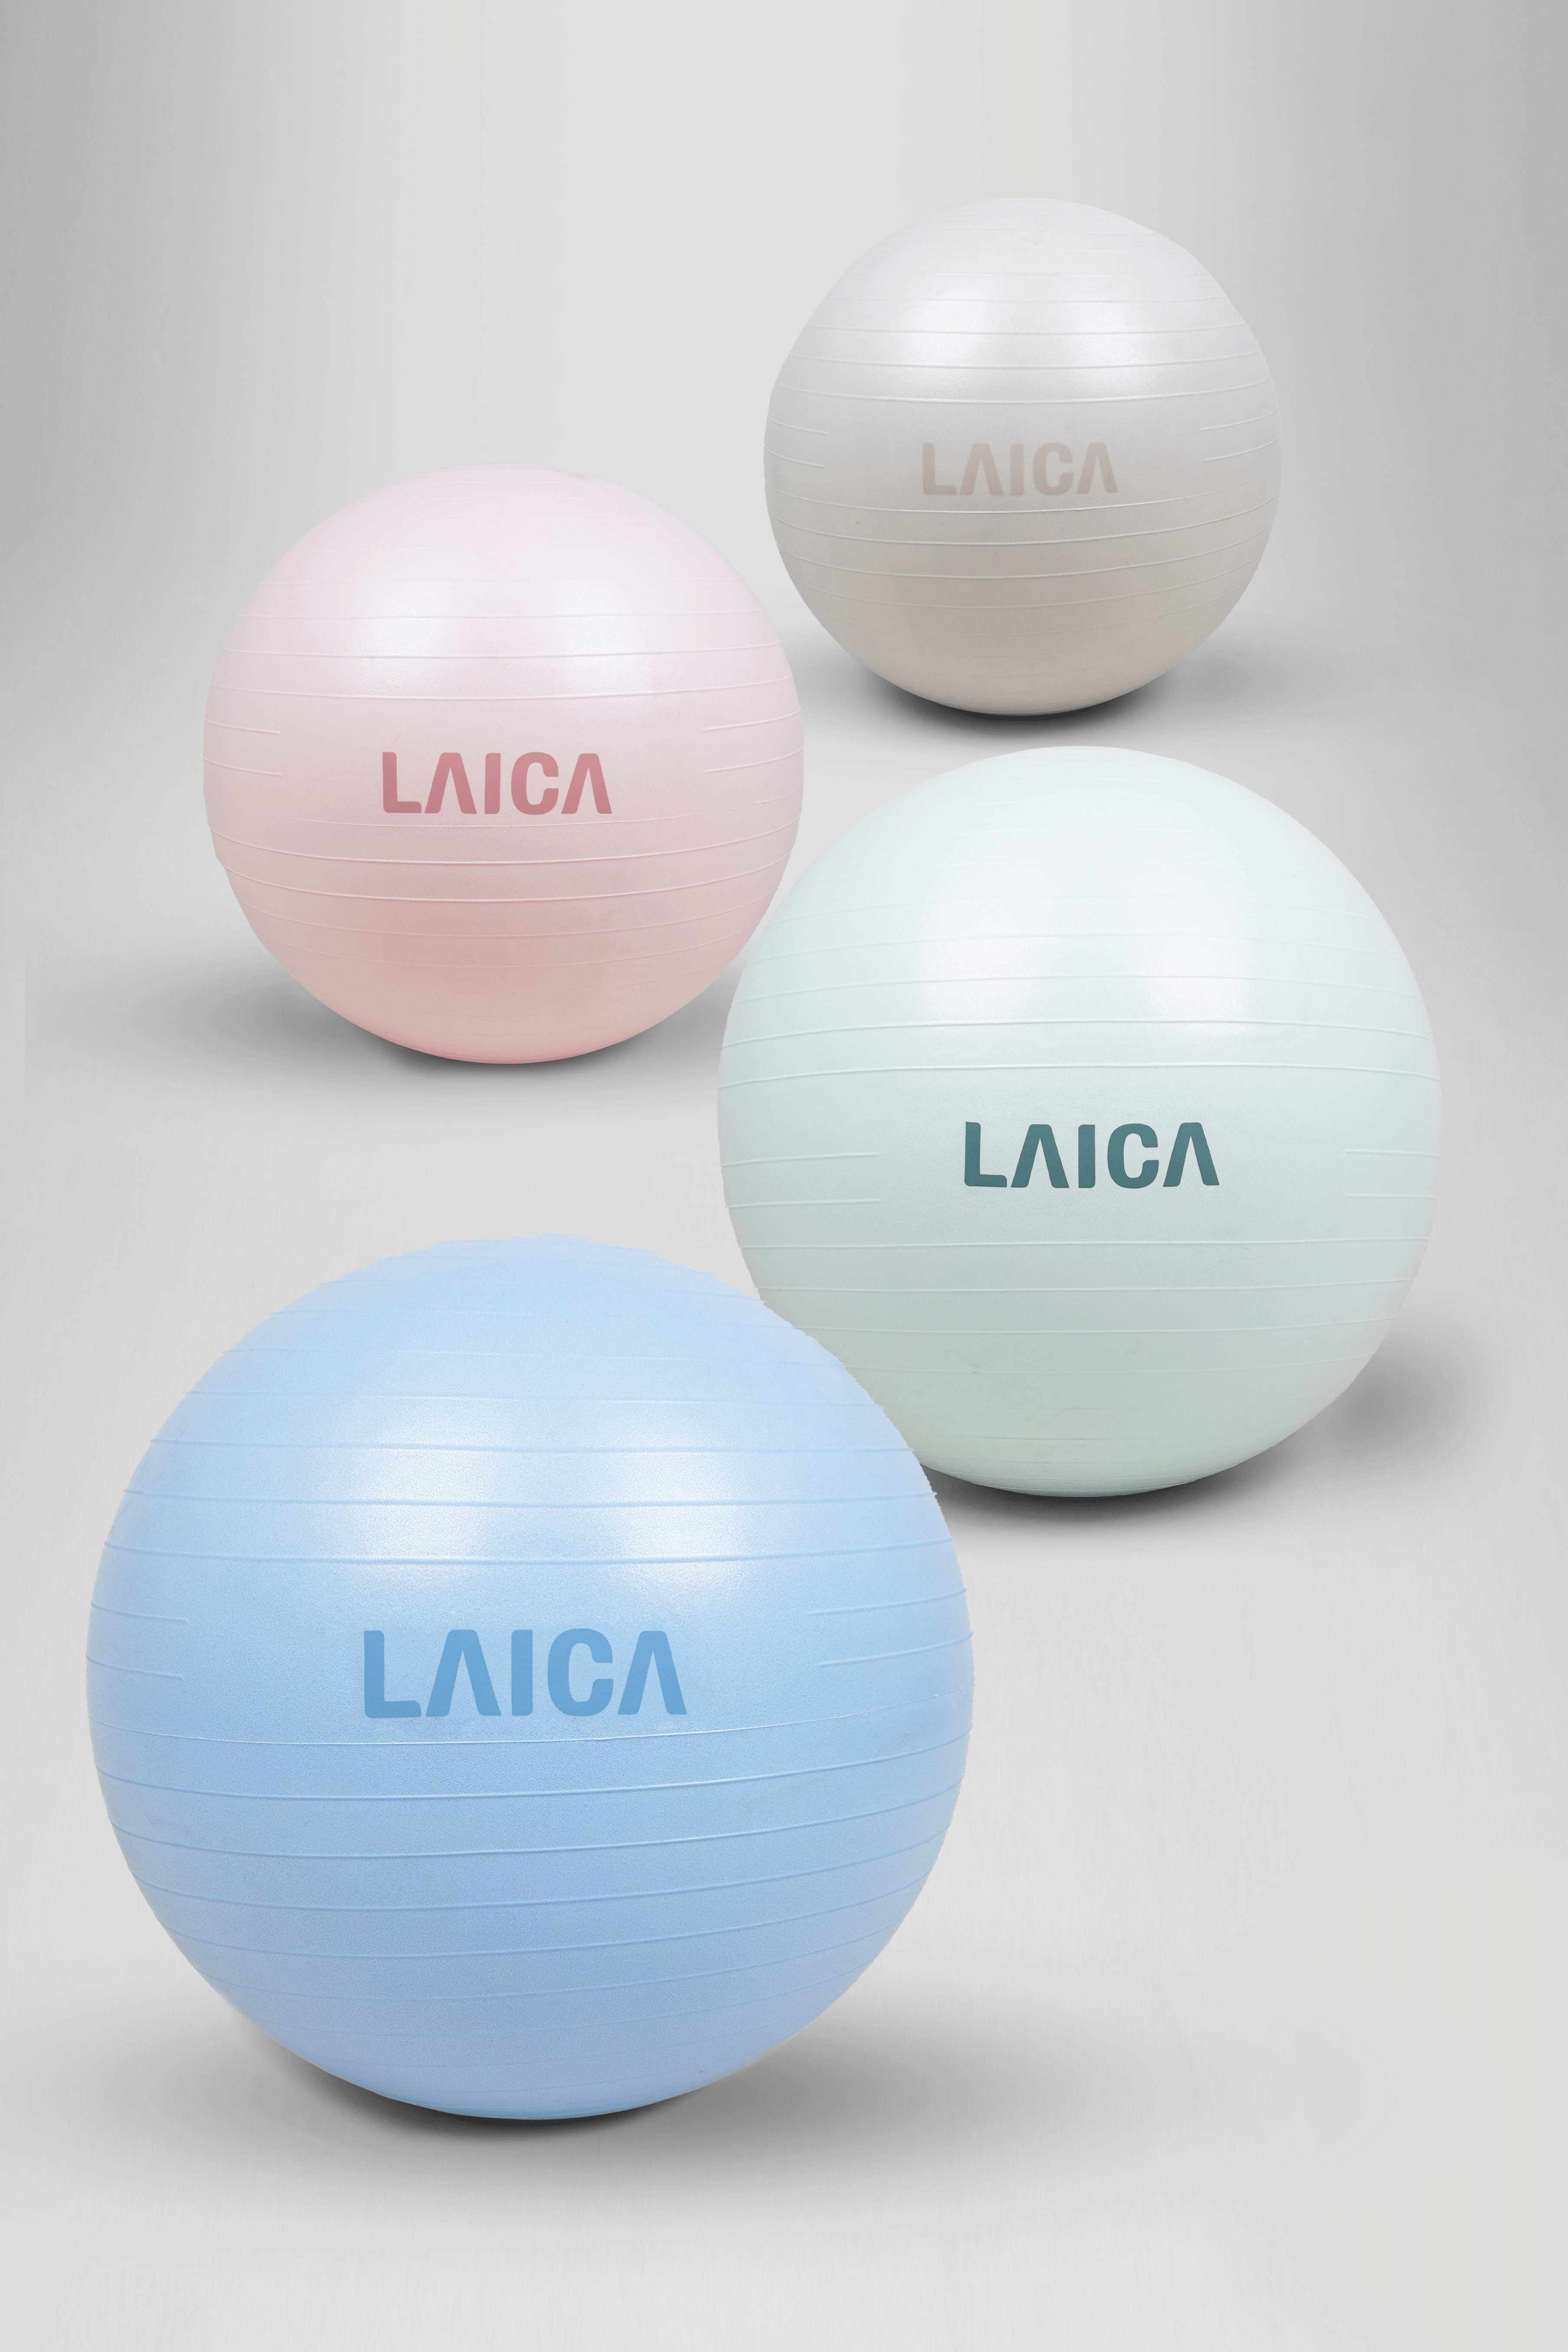 LAICA Gym Ball - Green